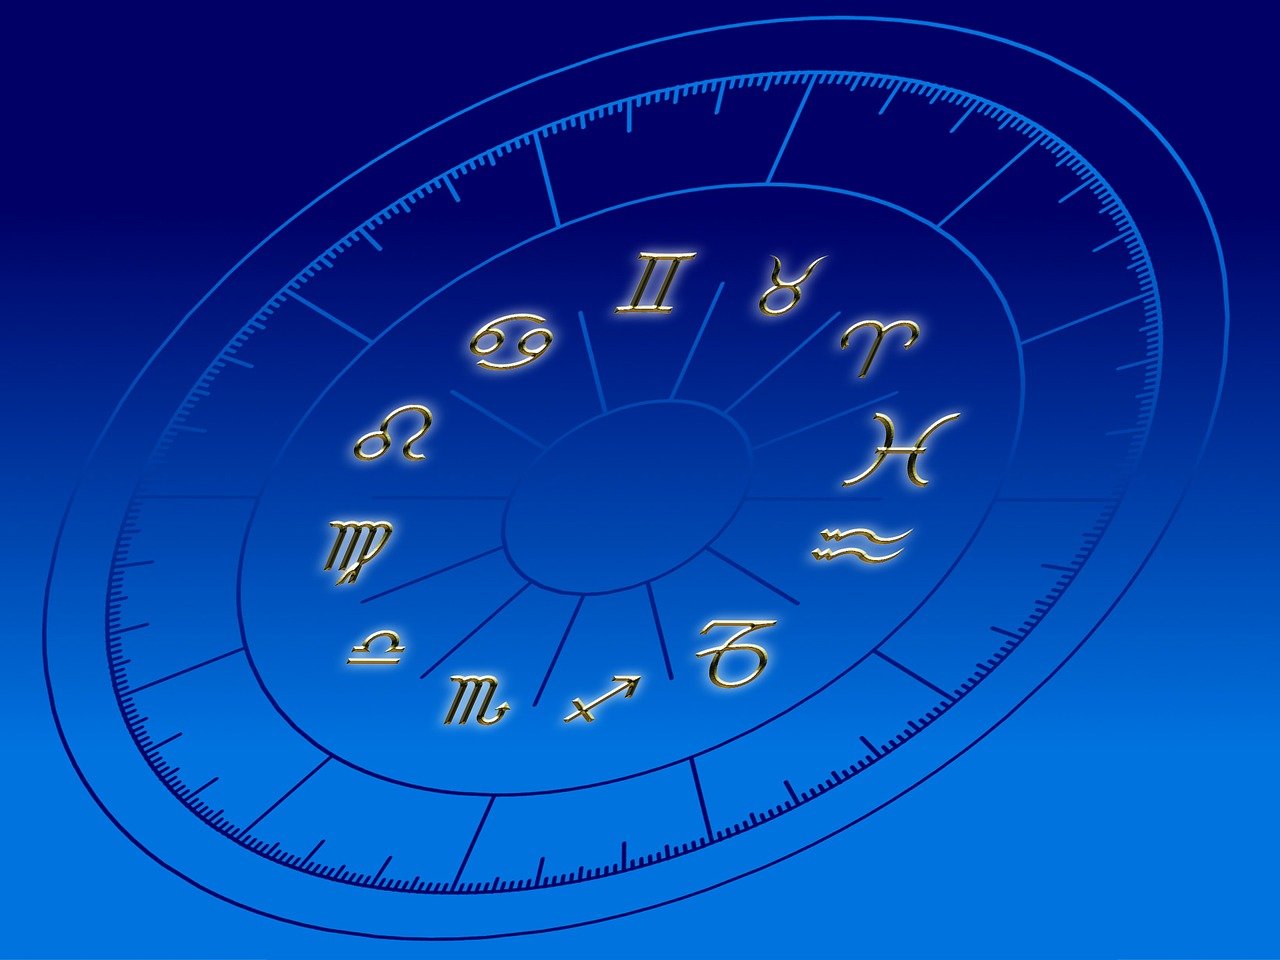 Illustration of the horoscope sign | Source: Pixabay